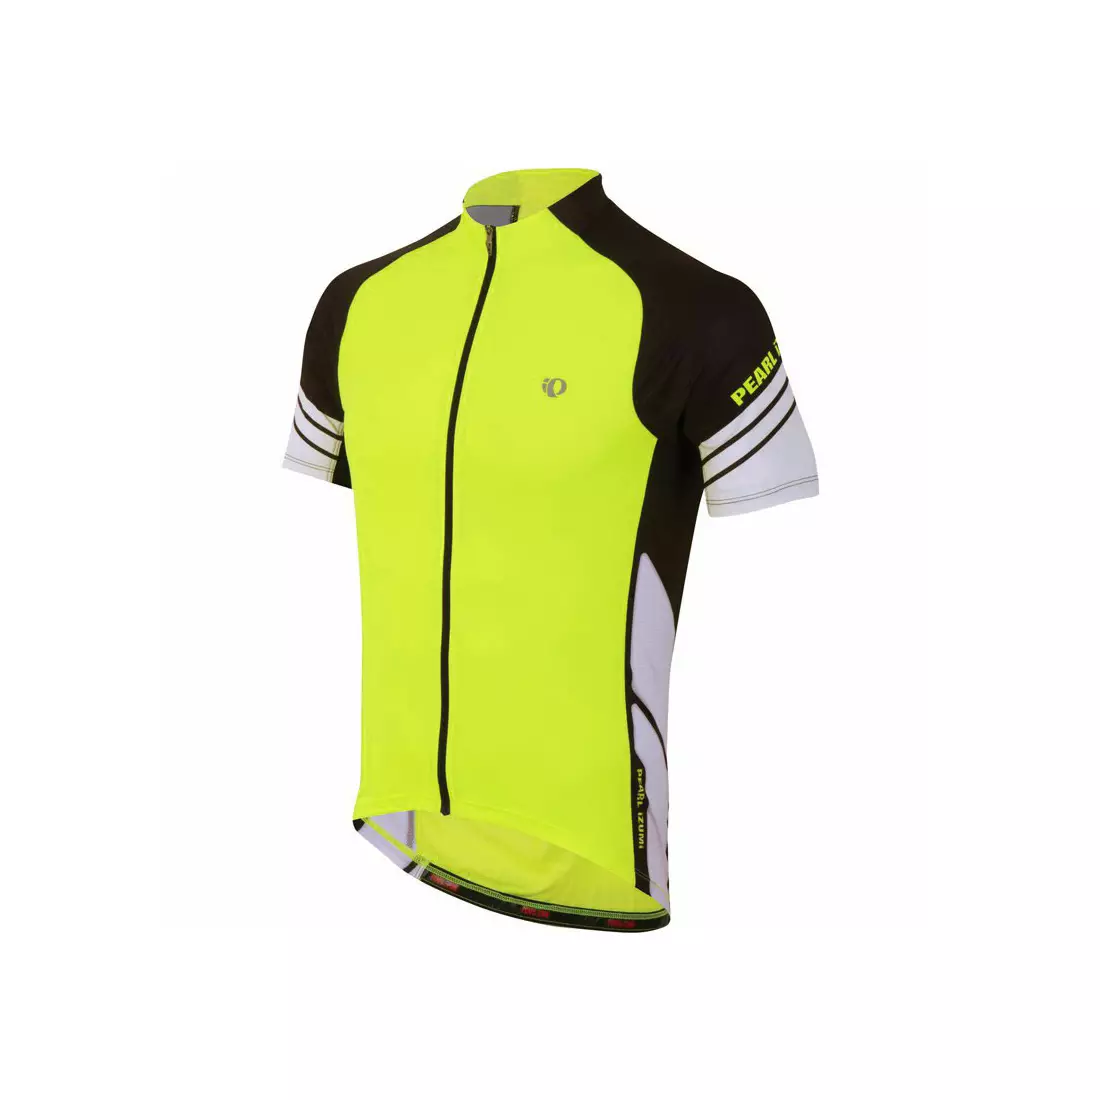 PEARL IZUMI - ELITE 11121301-429 - světlý cyklistický dres, barva: Fluoro-černá